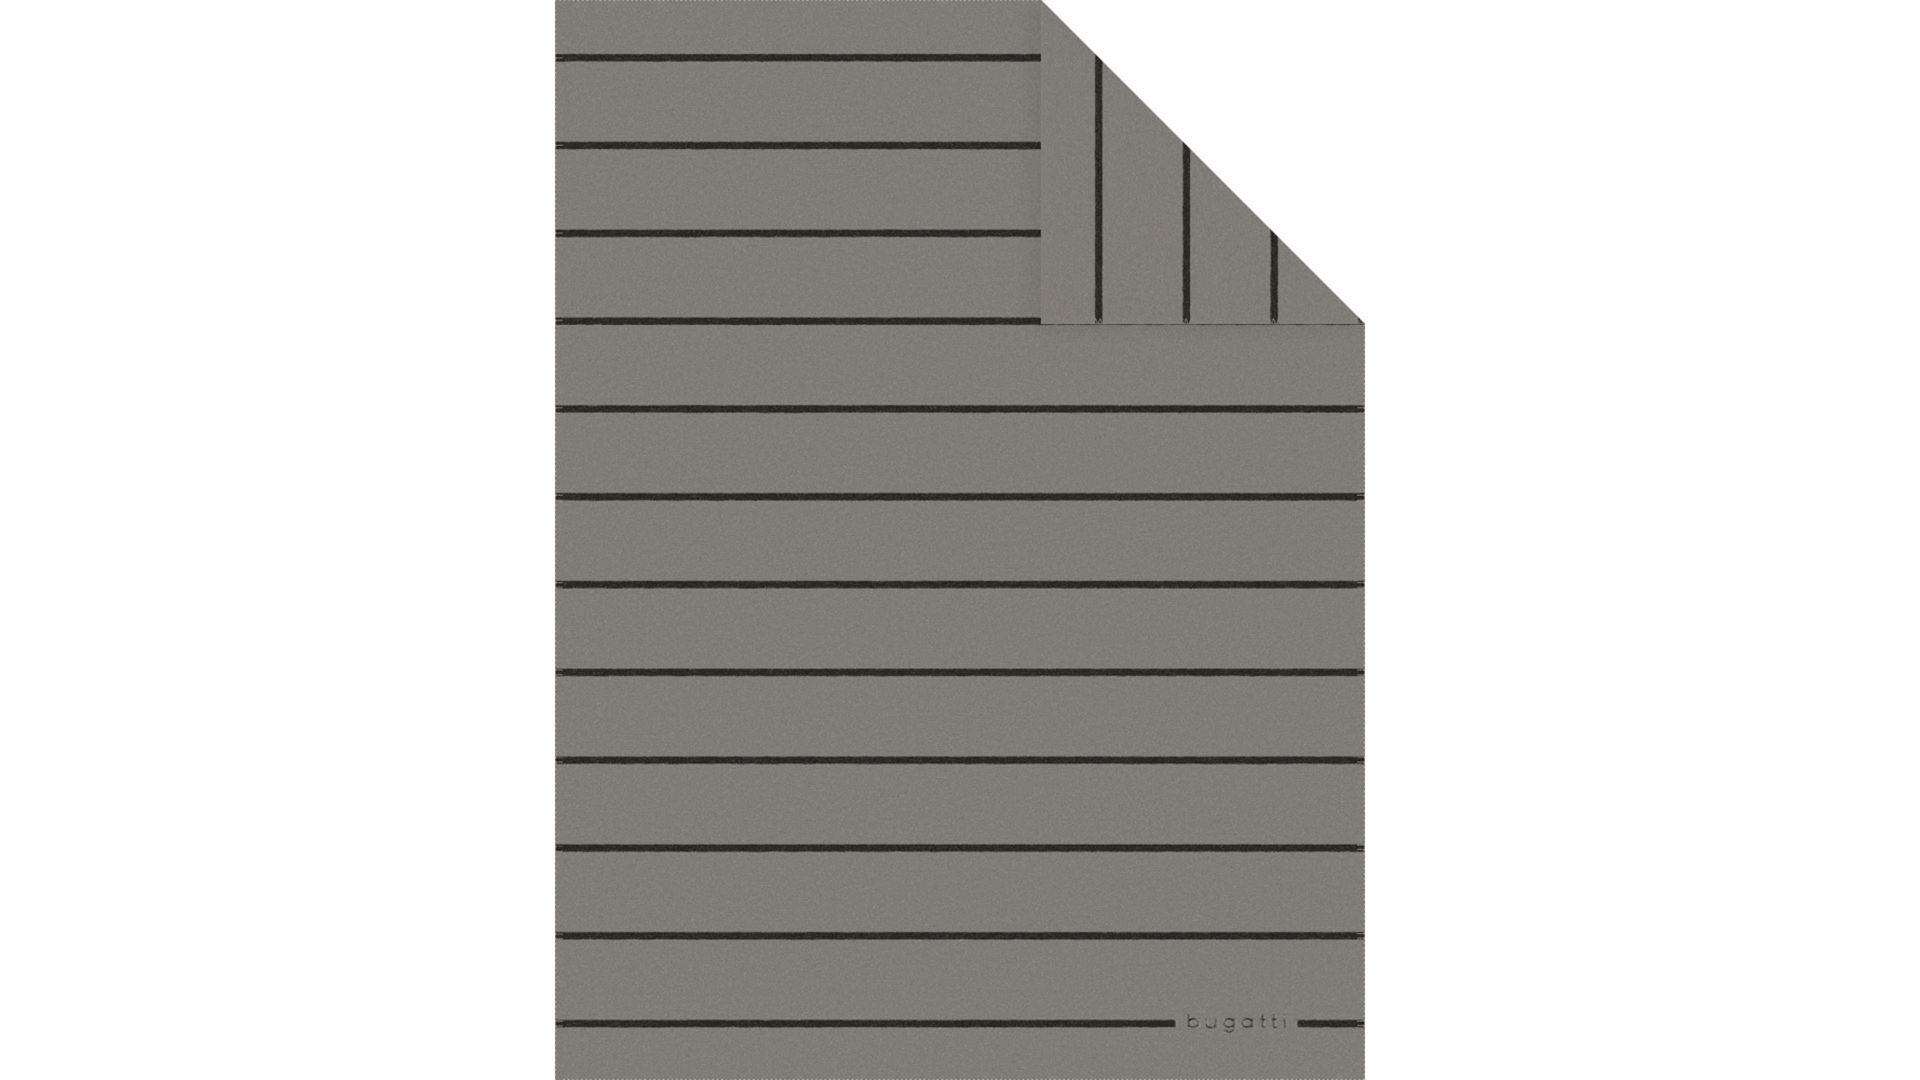 Wohndecke Ibena interiors aus Stoff in Grau bugatti Wohndecke grau-schwarz gestreift - ca. 150 x 200 cm